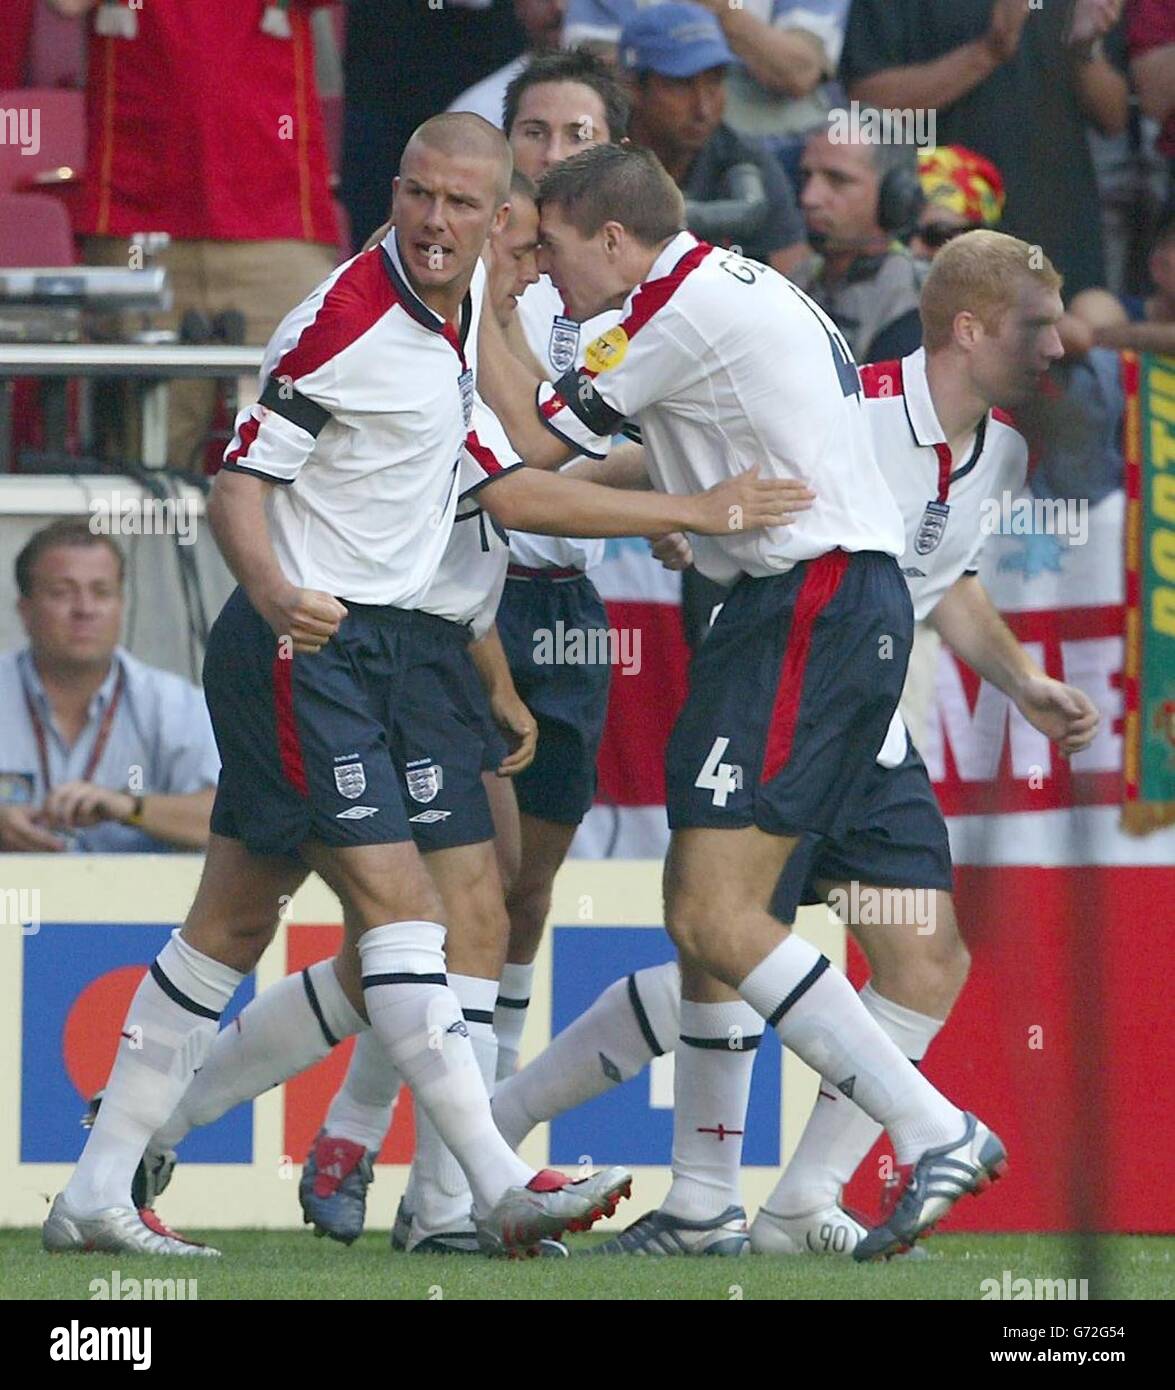 England's Michael Owen (2nd L) celebrates scoring against Portugal with team-mates Steven Gerrard (R) and David Beckham (L) during the Euro 2004 quarter-final match at the Estadio de Luz, Lisbon, Portugal. Stock Photo